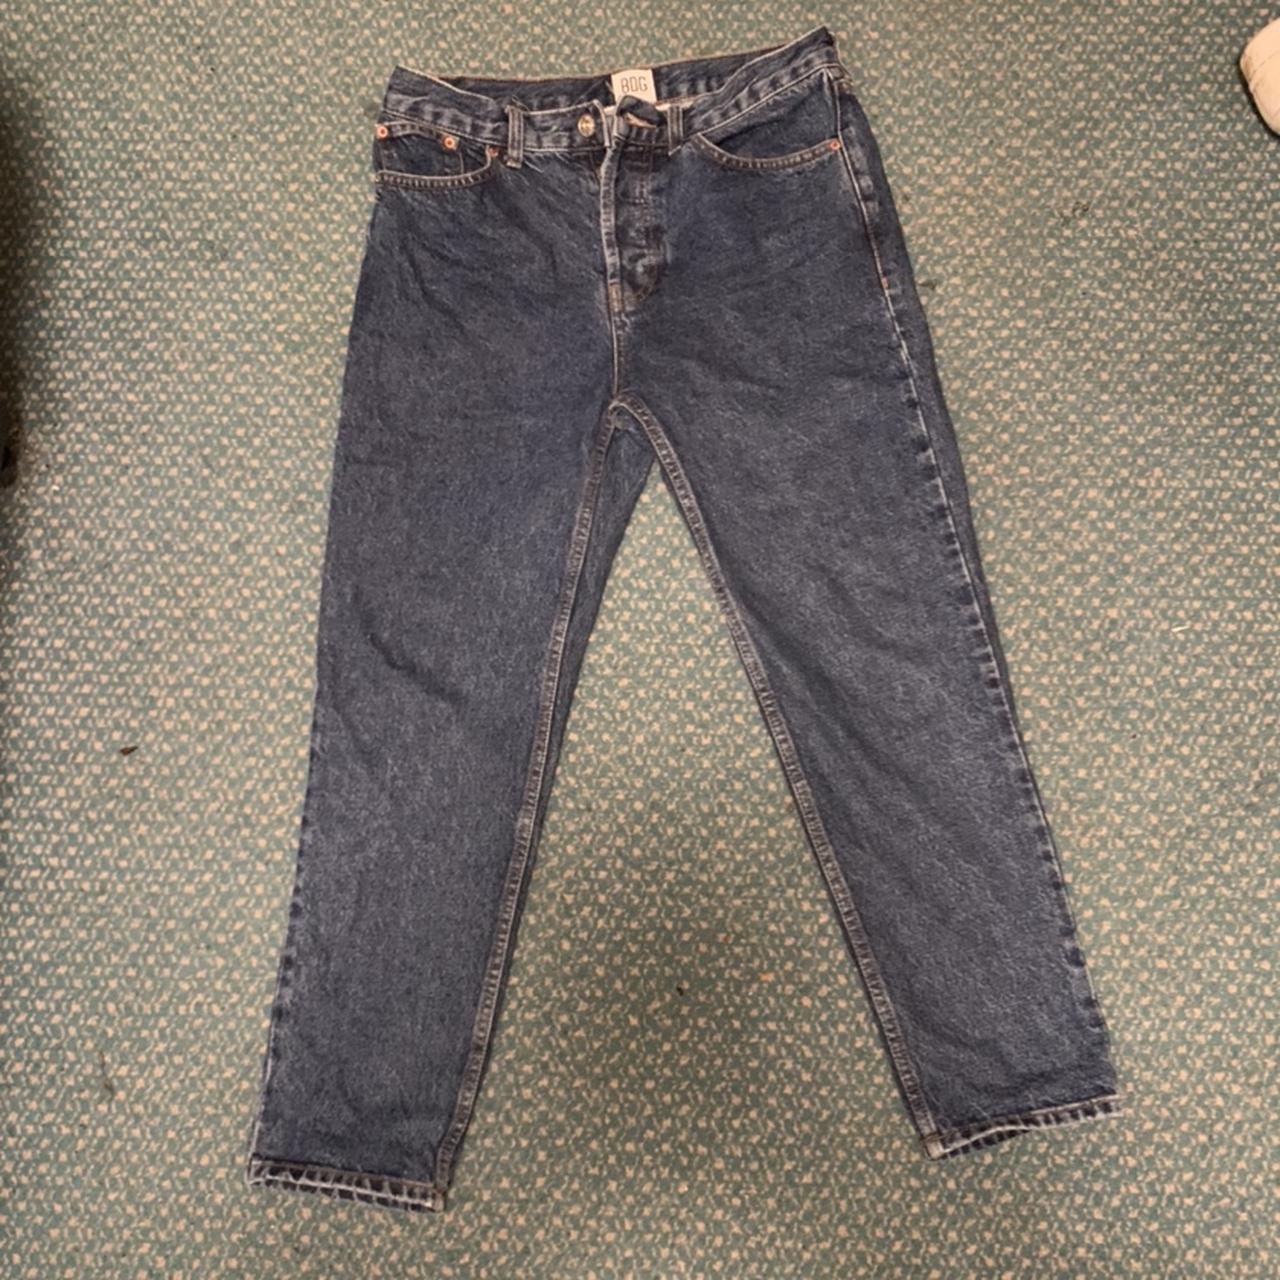 Urban Outfitters BDG DAD jeans in dark blue, baggy... - Depop